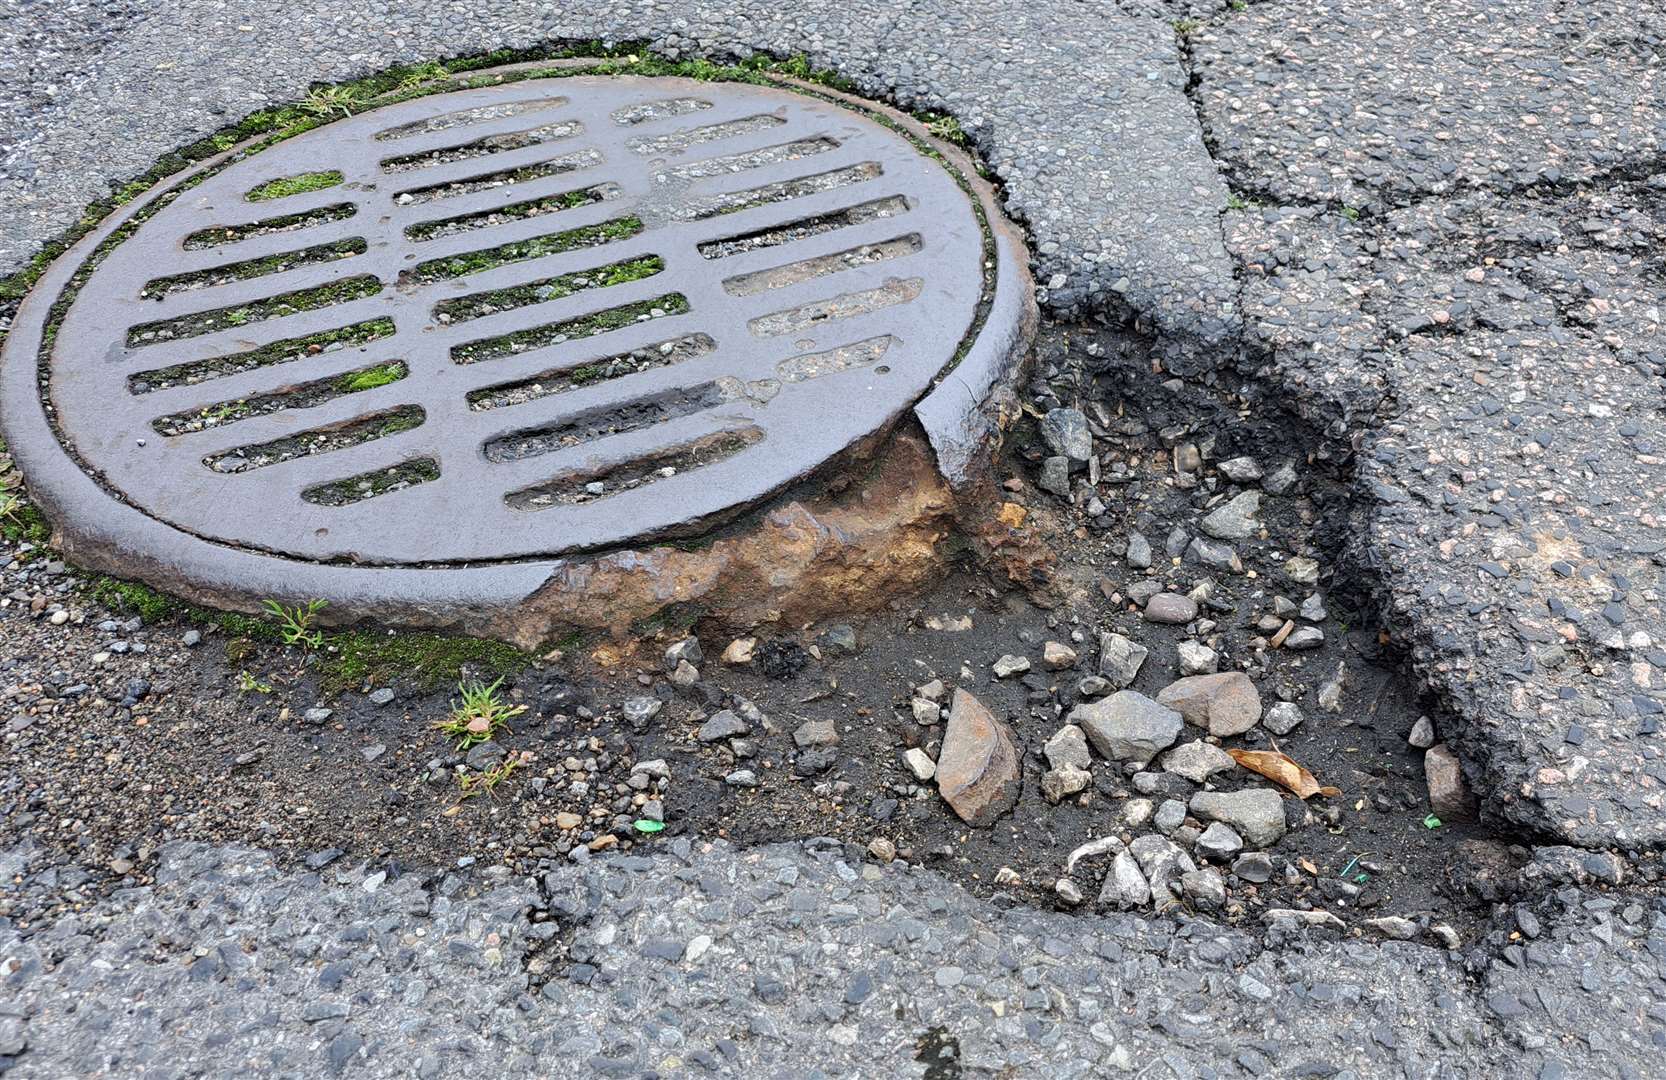 A second deep pothole at Belgrave Road, Dover